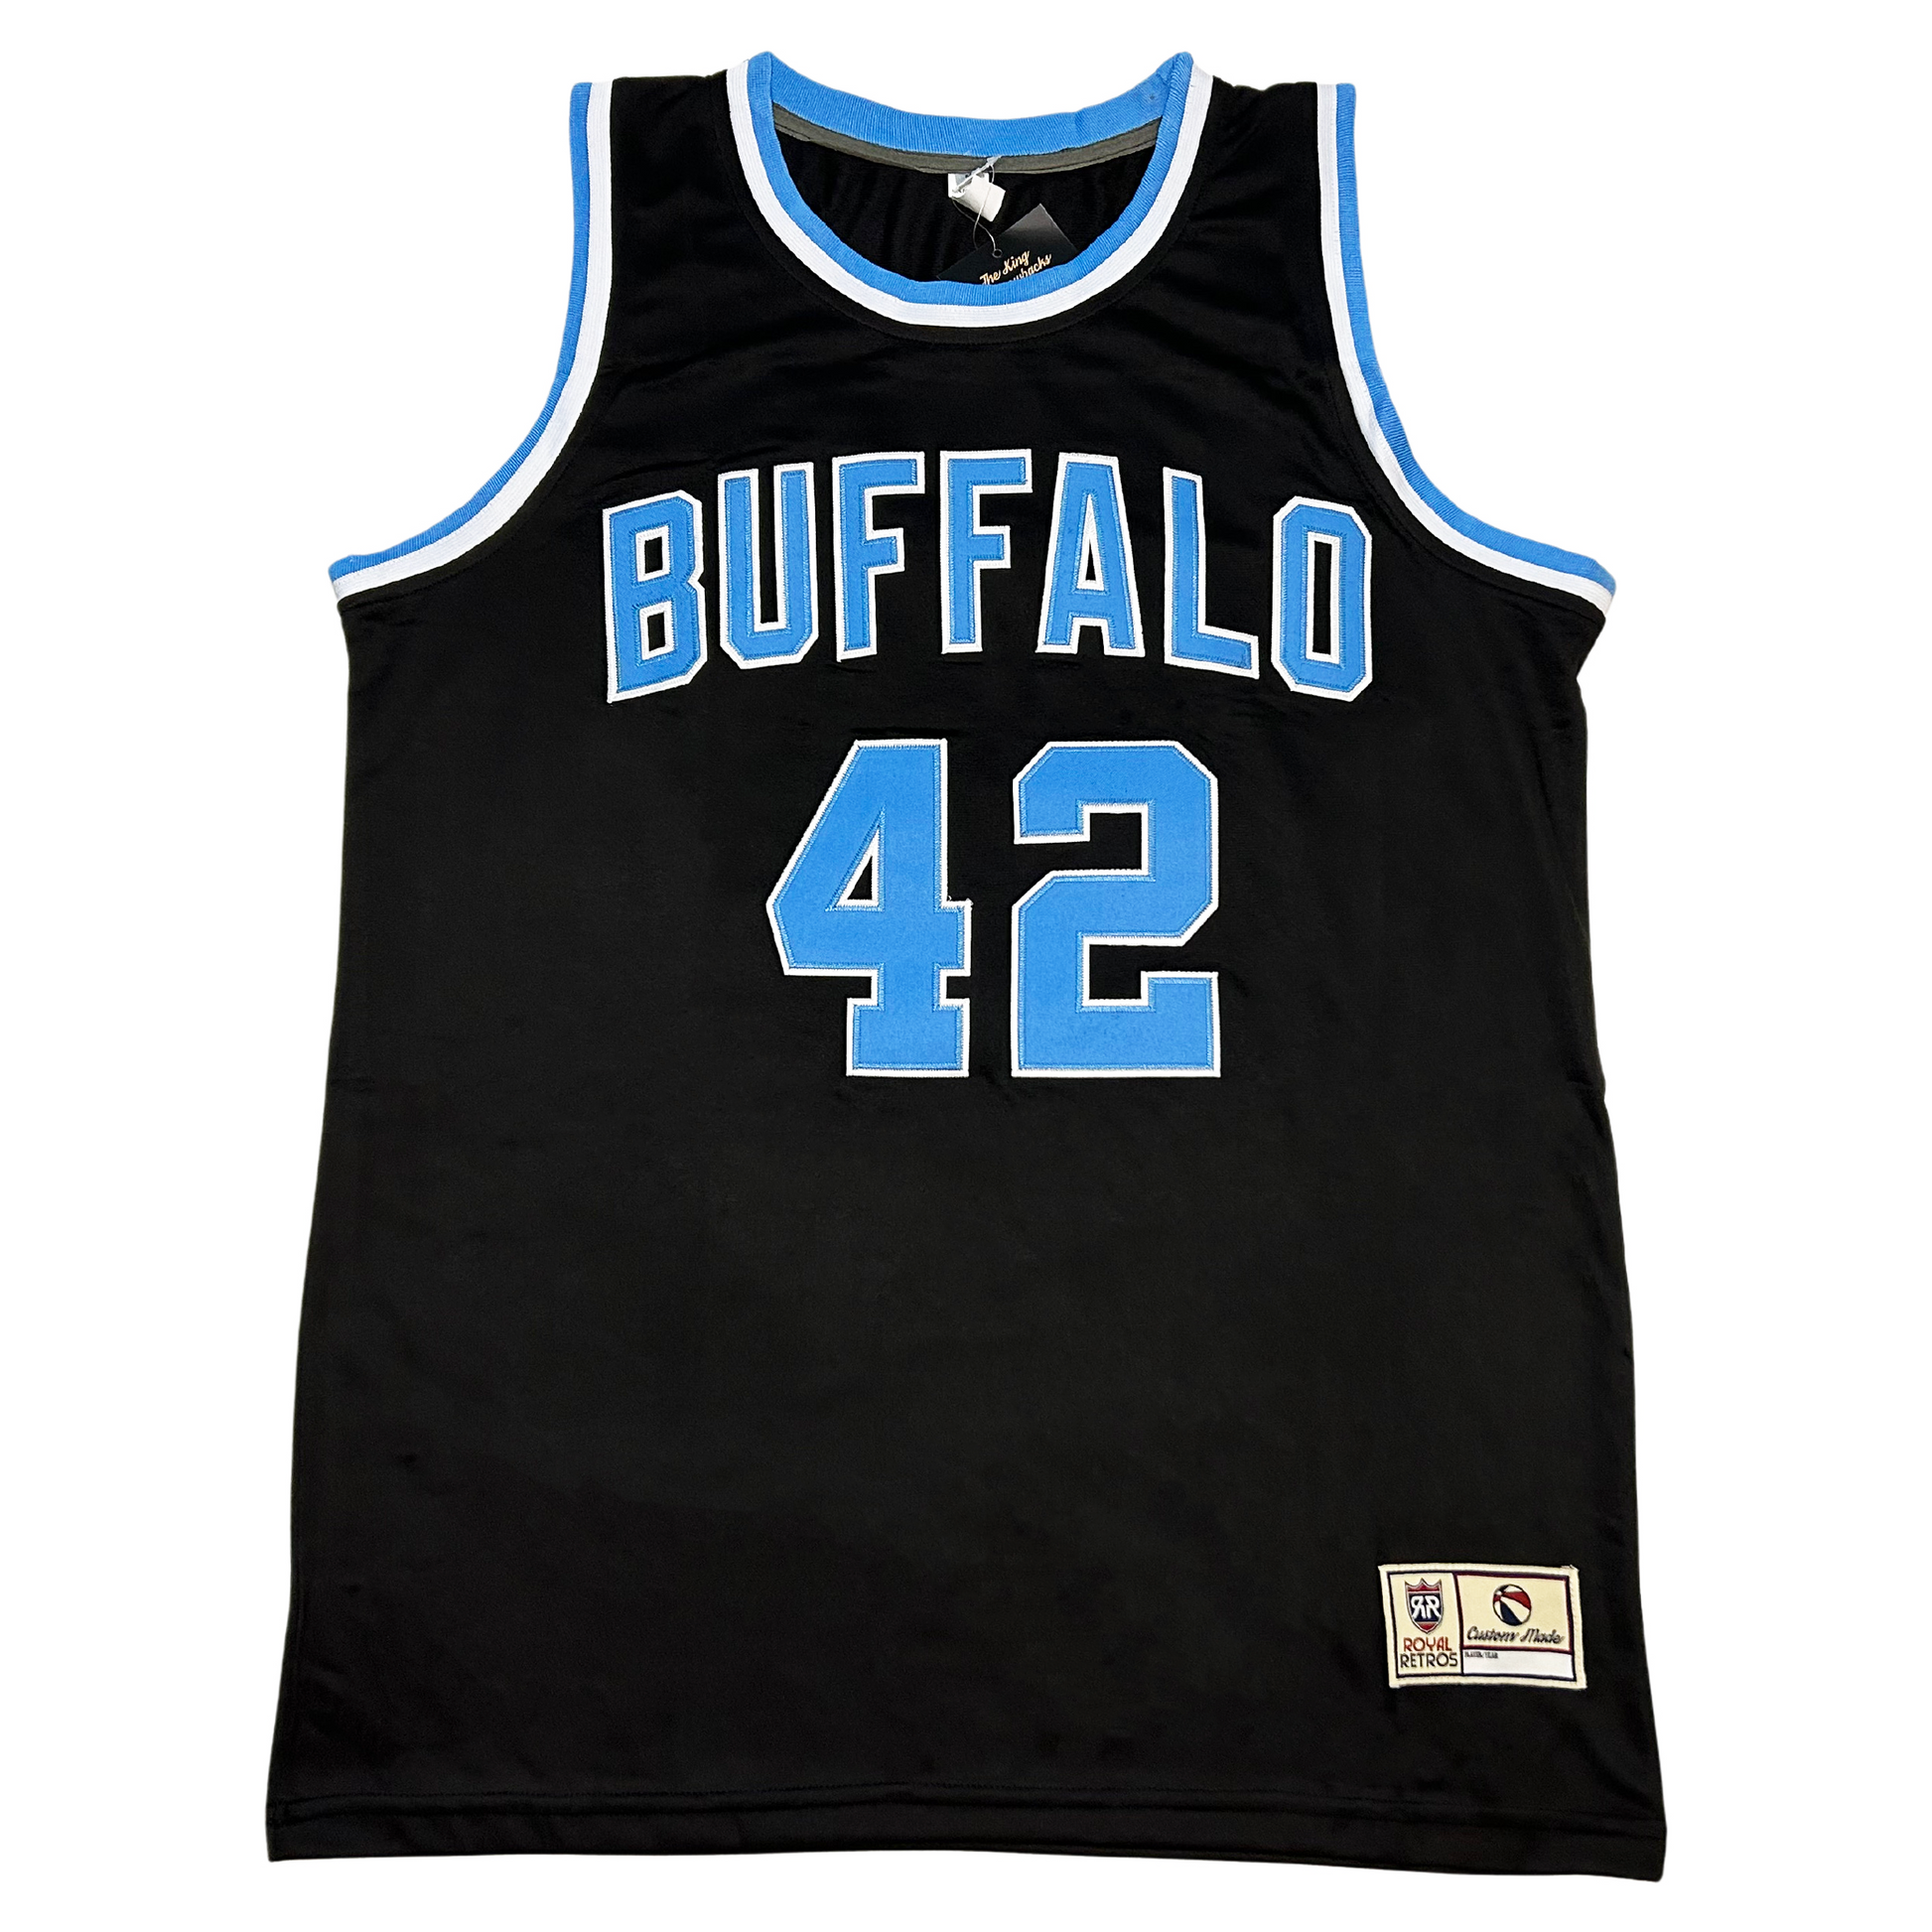 buffalo braves jersey for sale